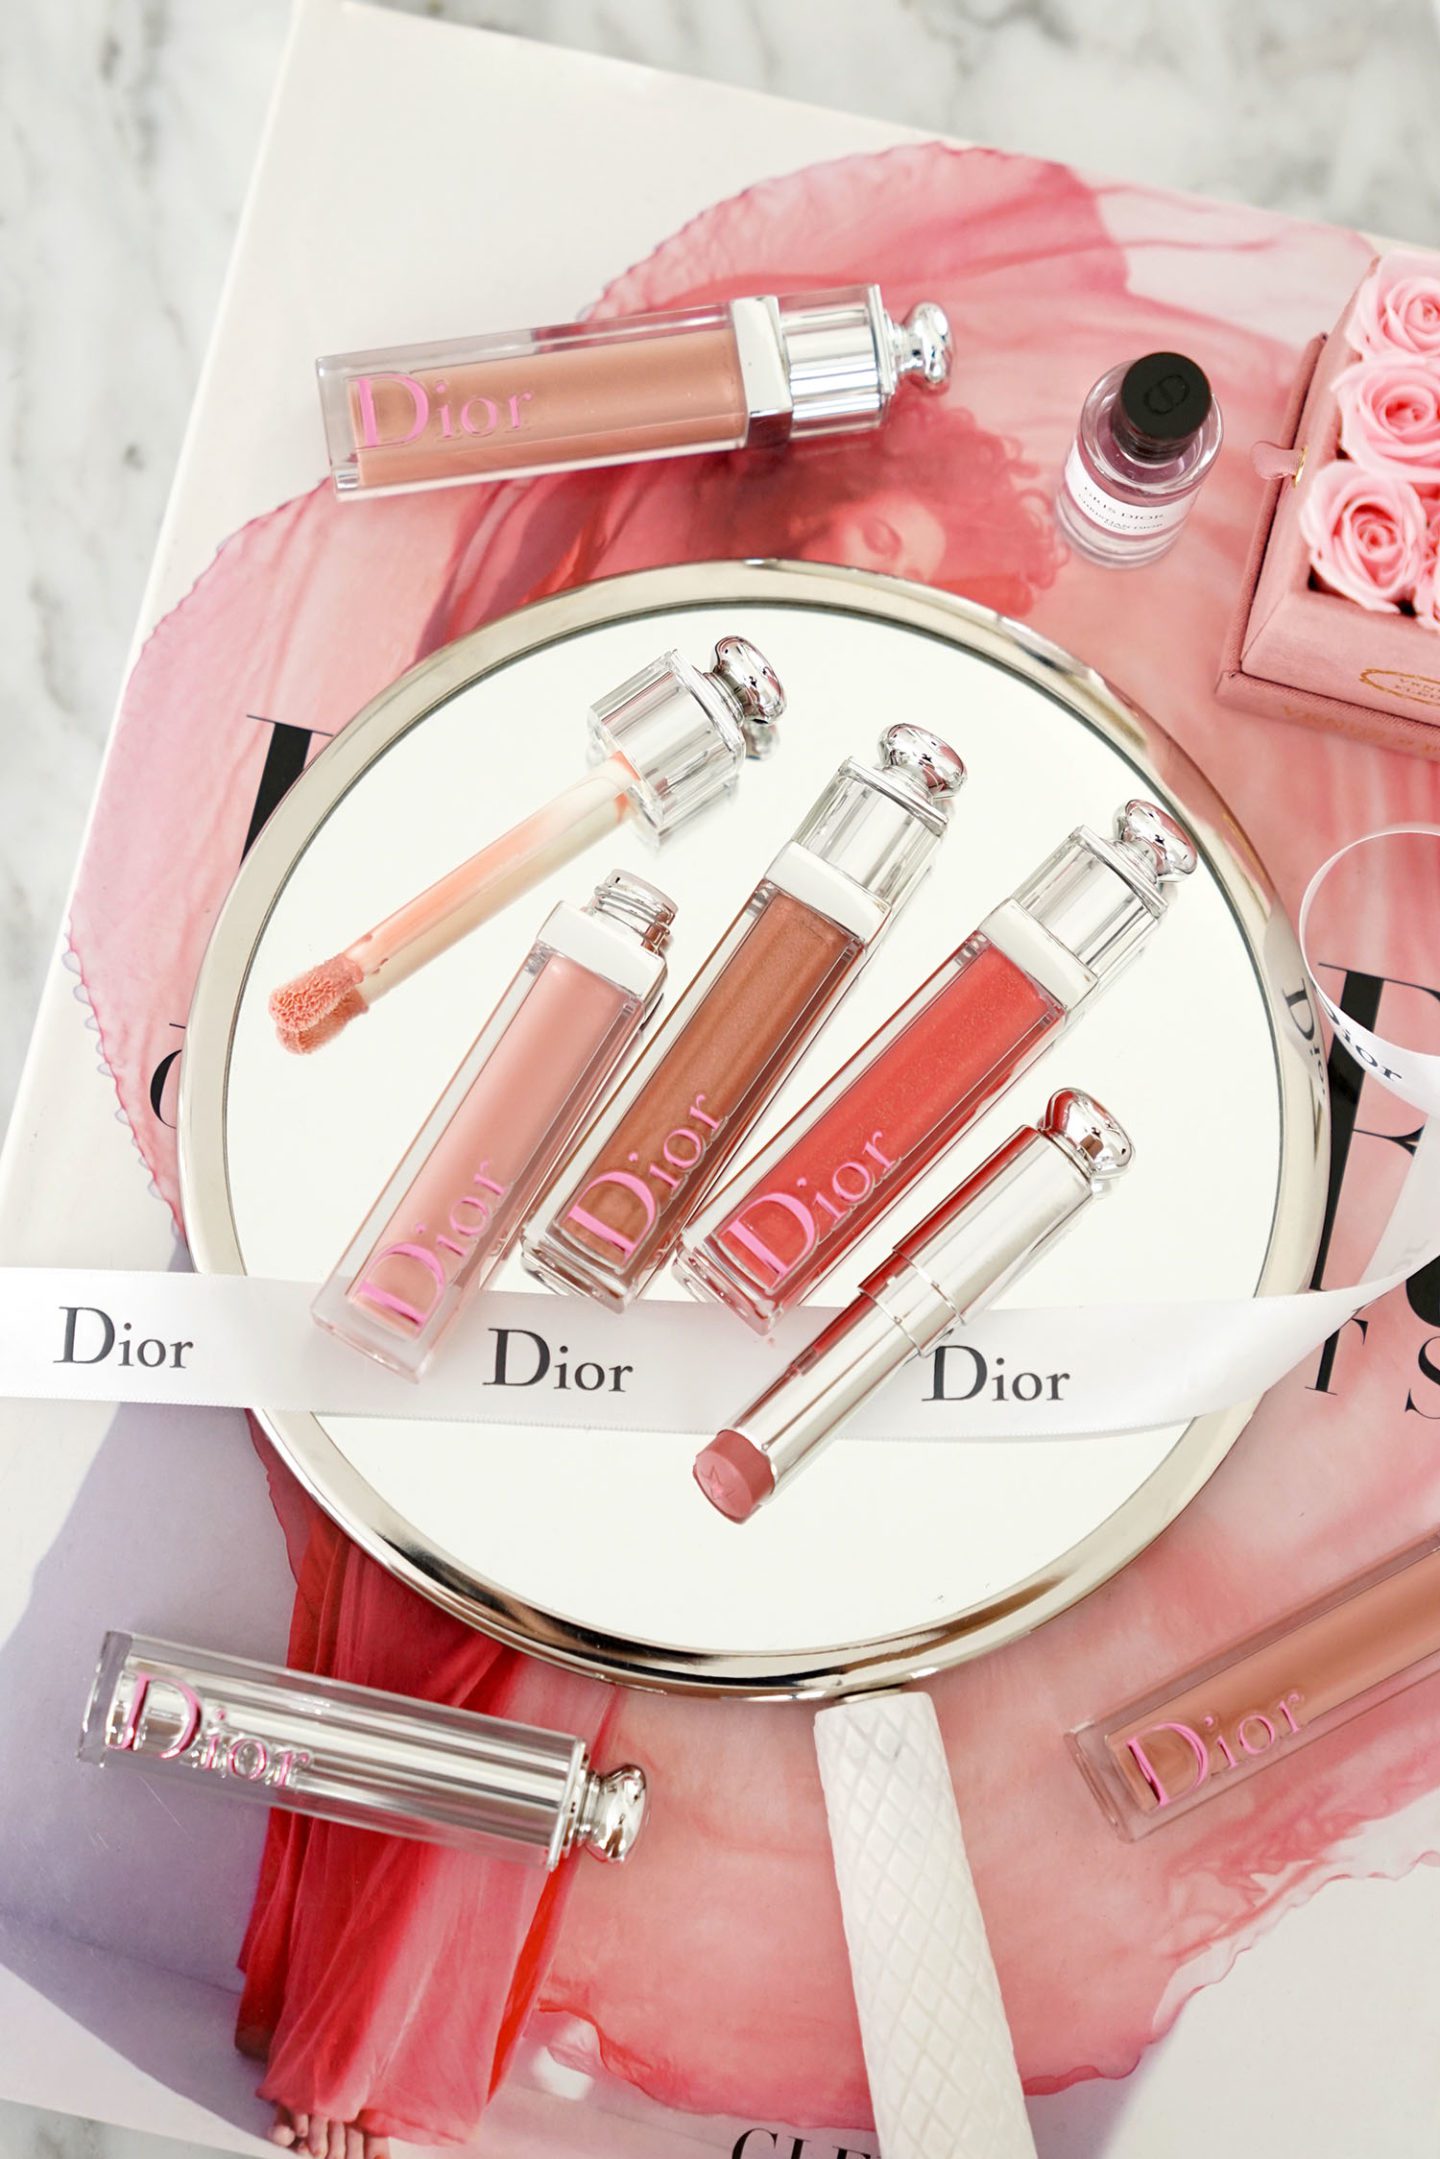 Dior Addict Stellar Gloss and Halo Shine Lipsticks